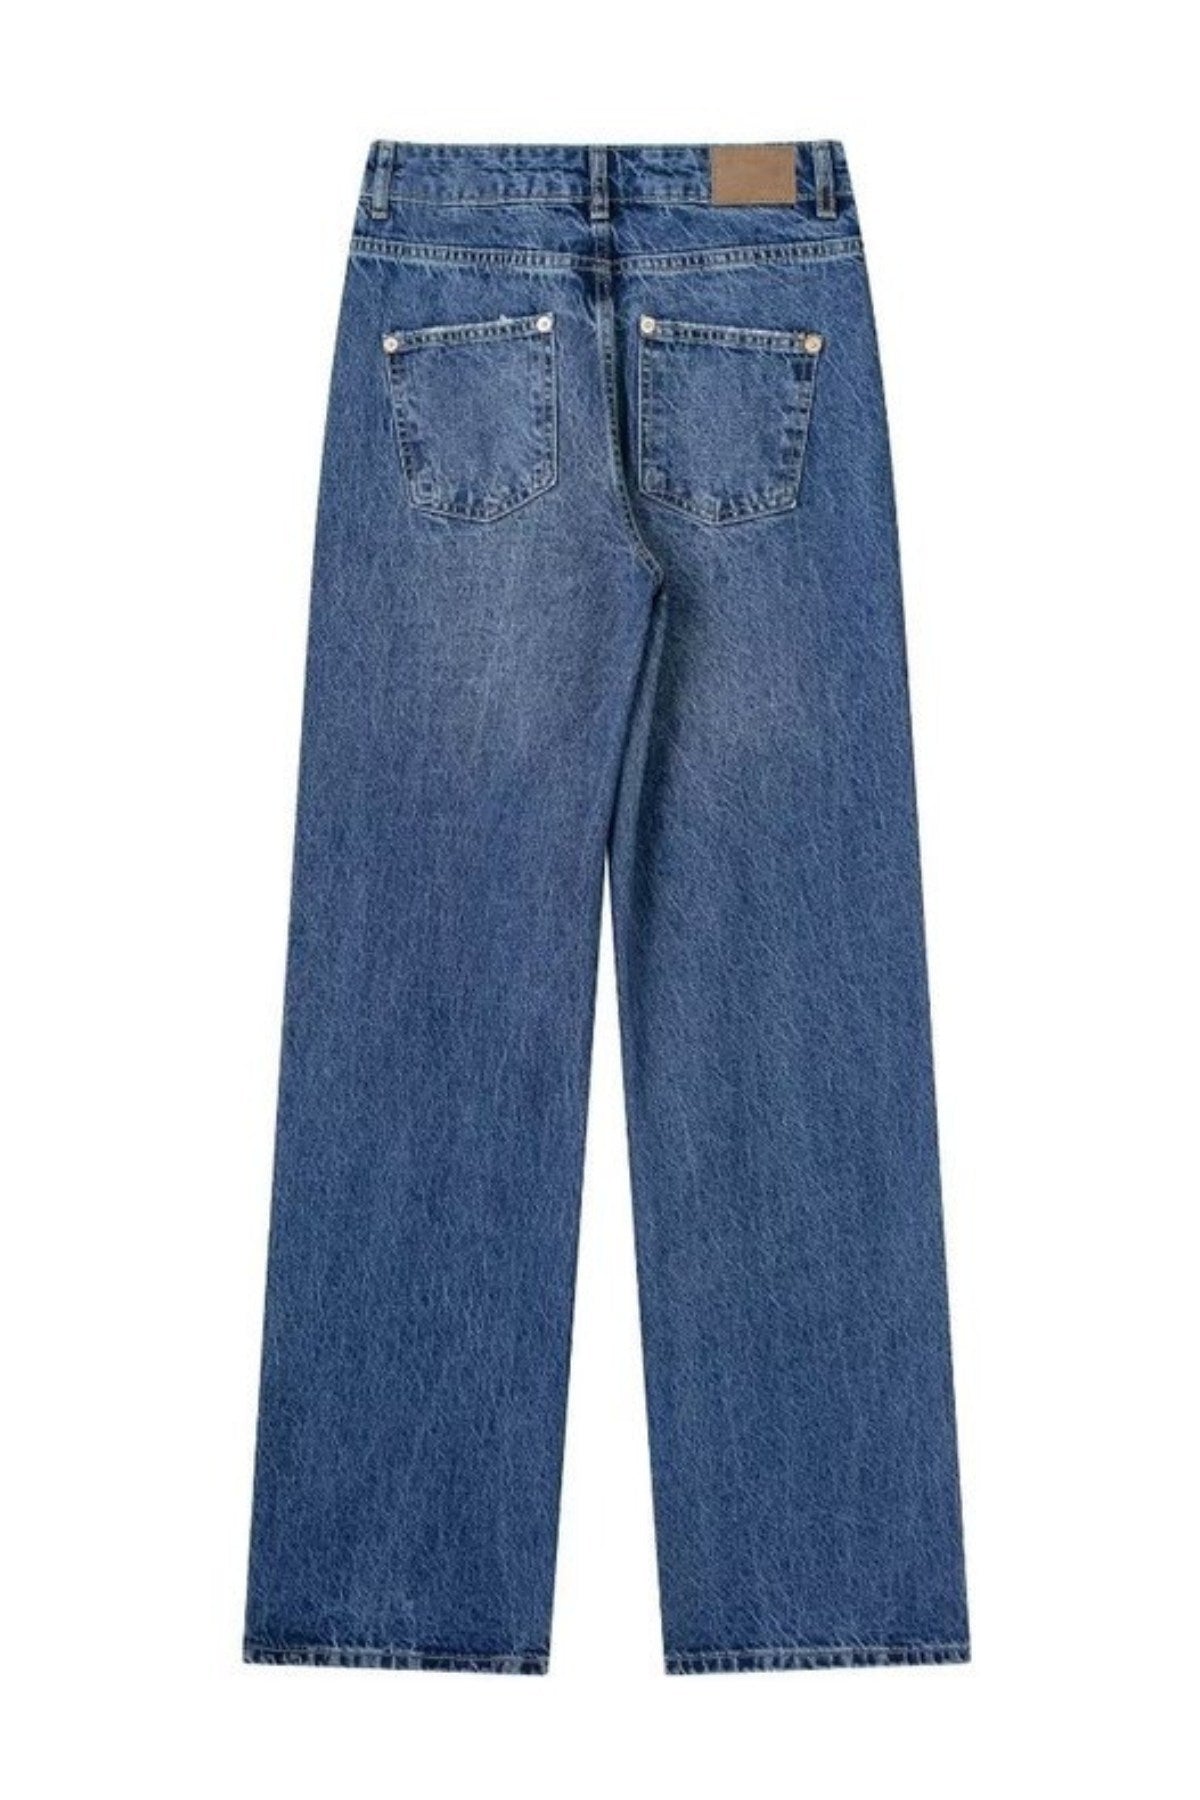 BLAKE High-Waist Straight Leg Full Length Jeans (Dark Blue Washed)